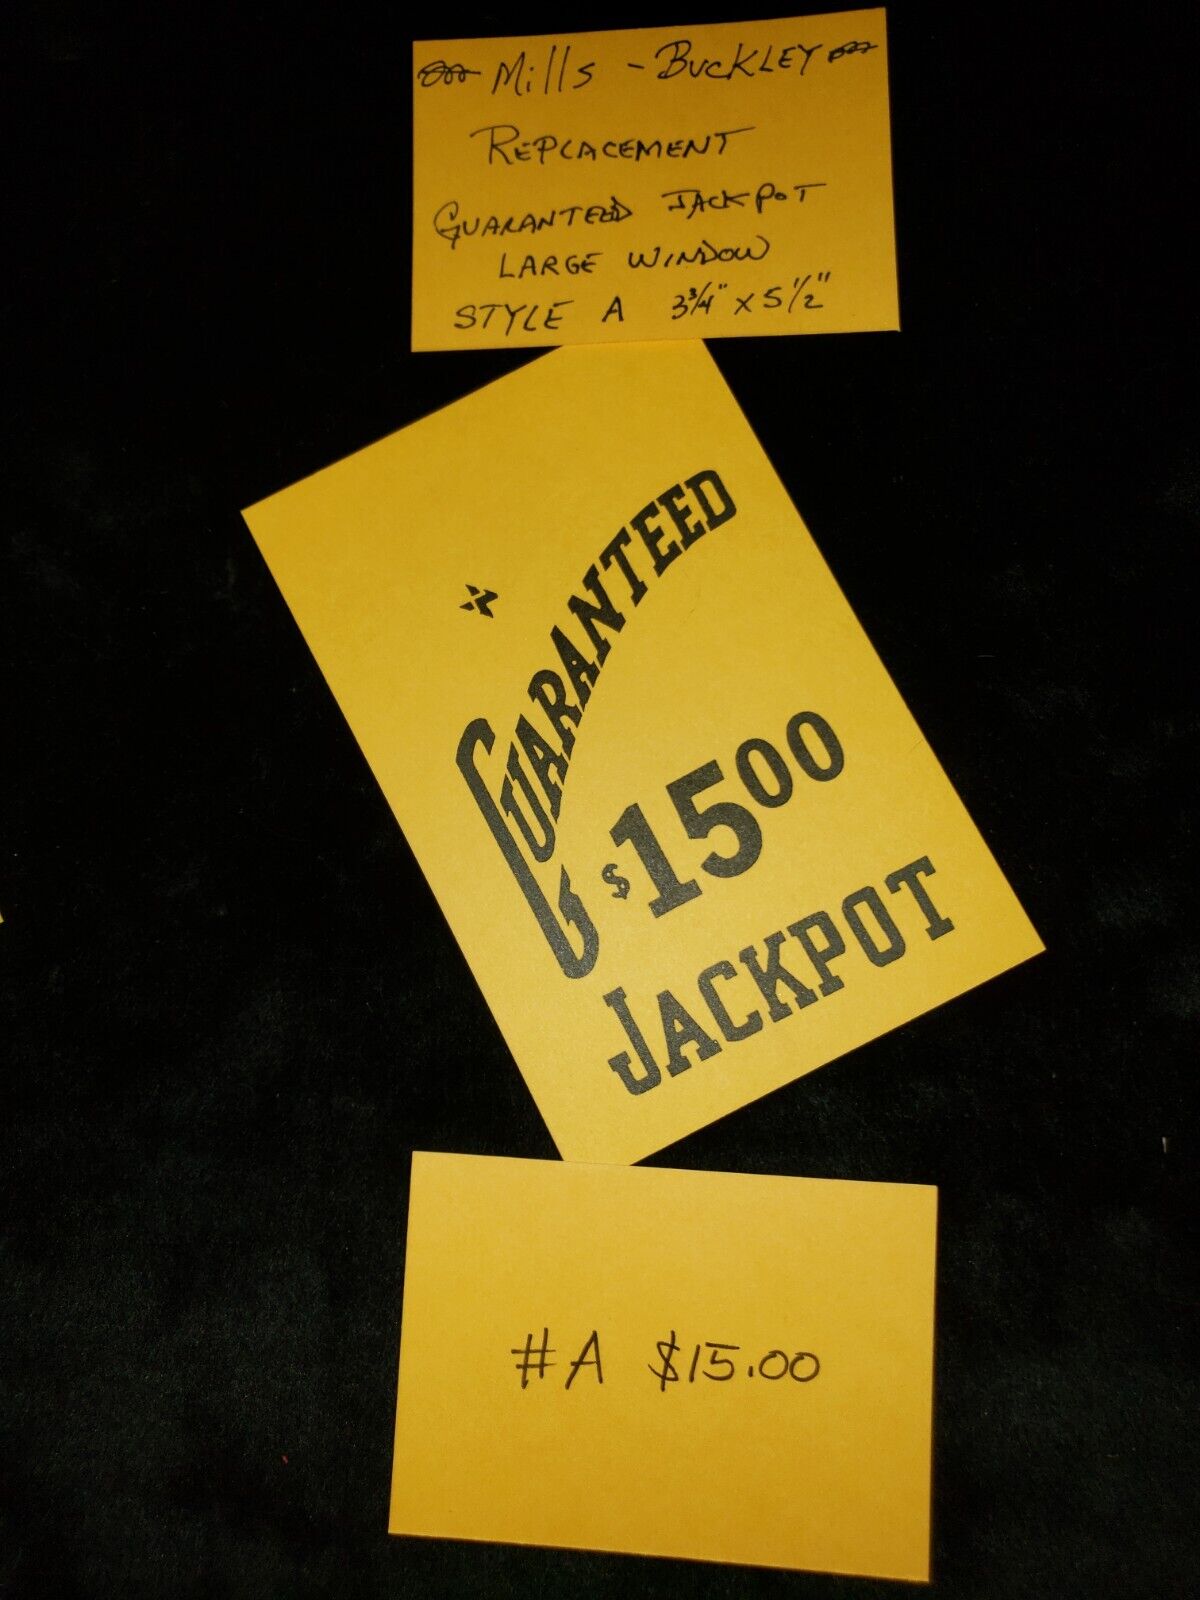 MILLS•BUCKLEY GUARANTEED  JACKPOT CARD ANTQ SLOT MACHINE #A$15.00